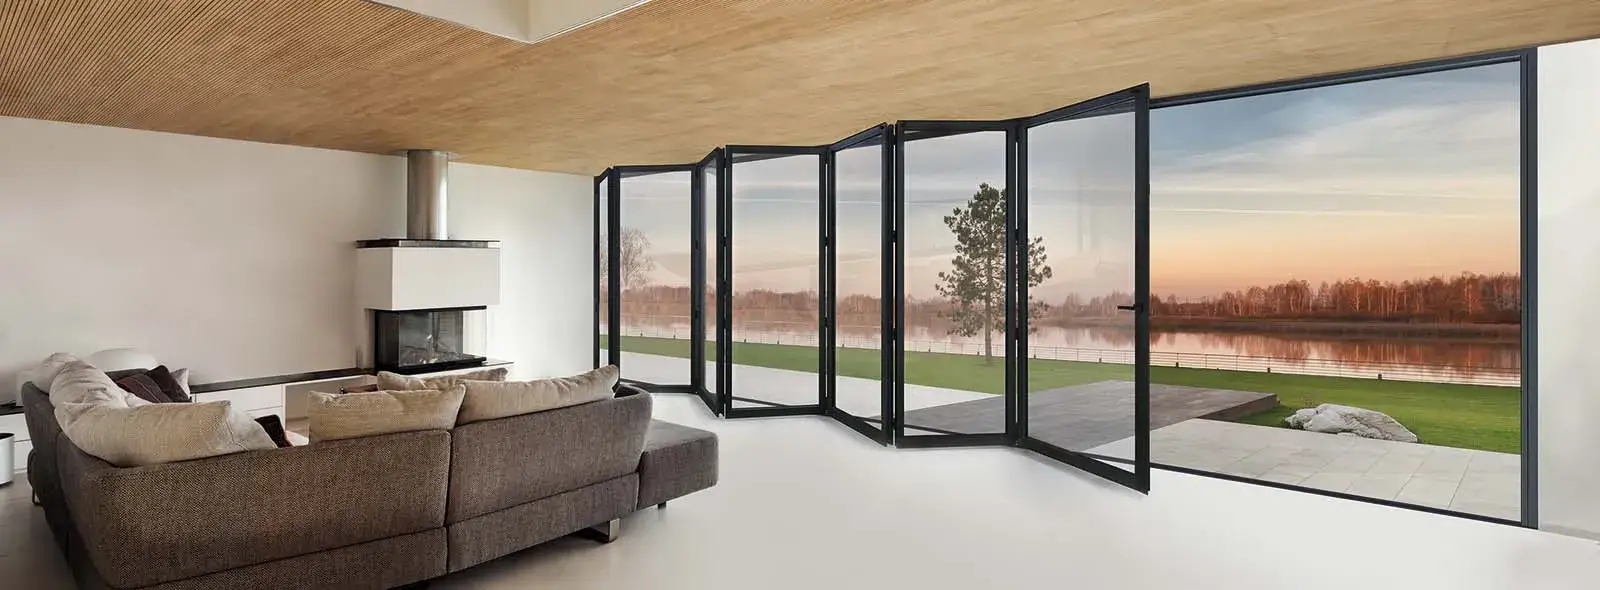 Large wide bi-fold door inside living room